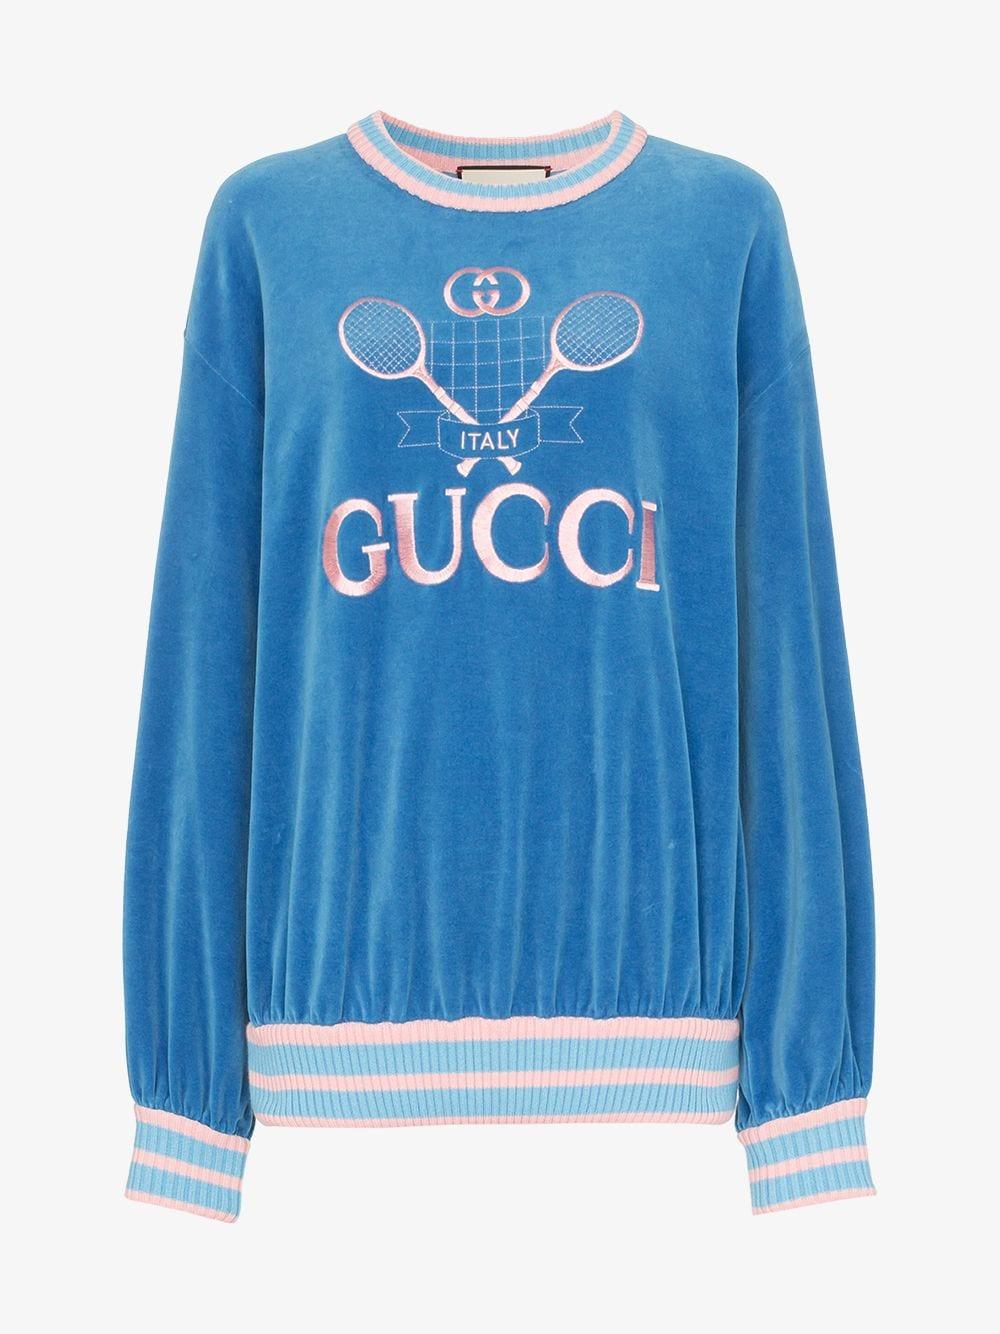 Gucci Cotton Sweatshirt With Tennis in Blue | Lyst